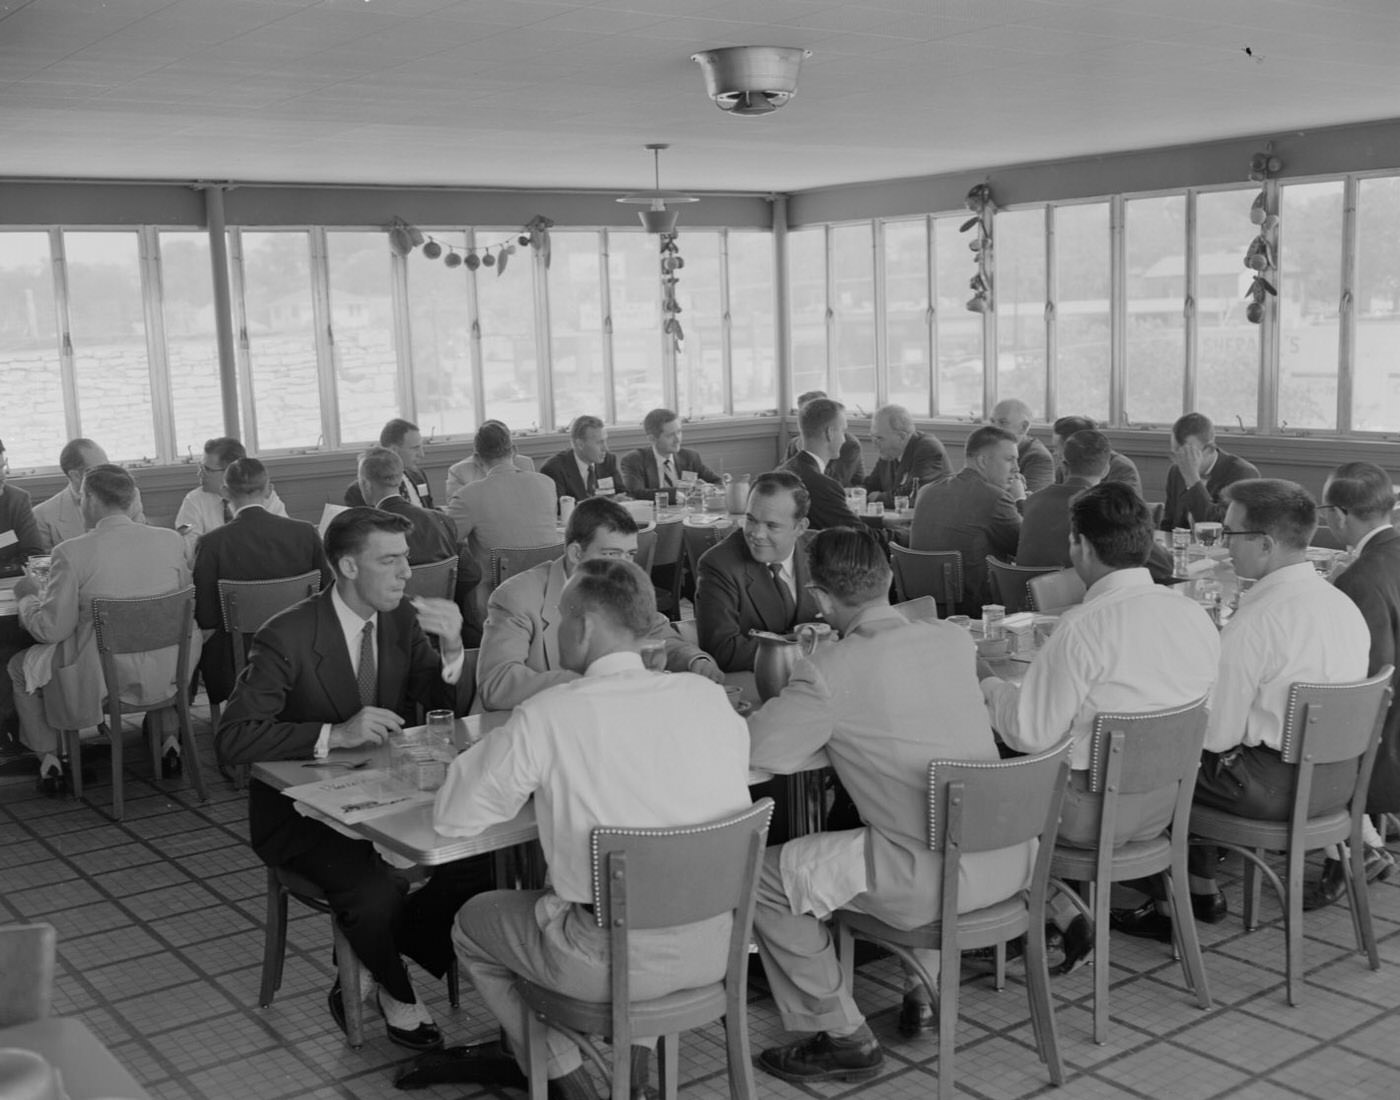 Men in Formal Wear Dining at University School of Law, 1954.